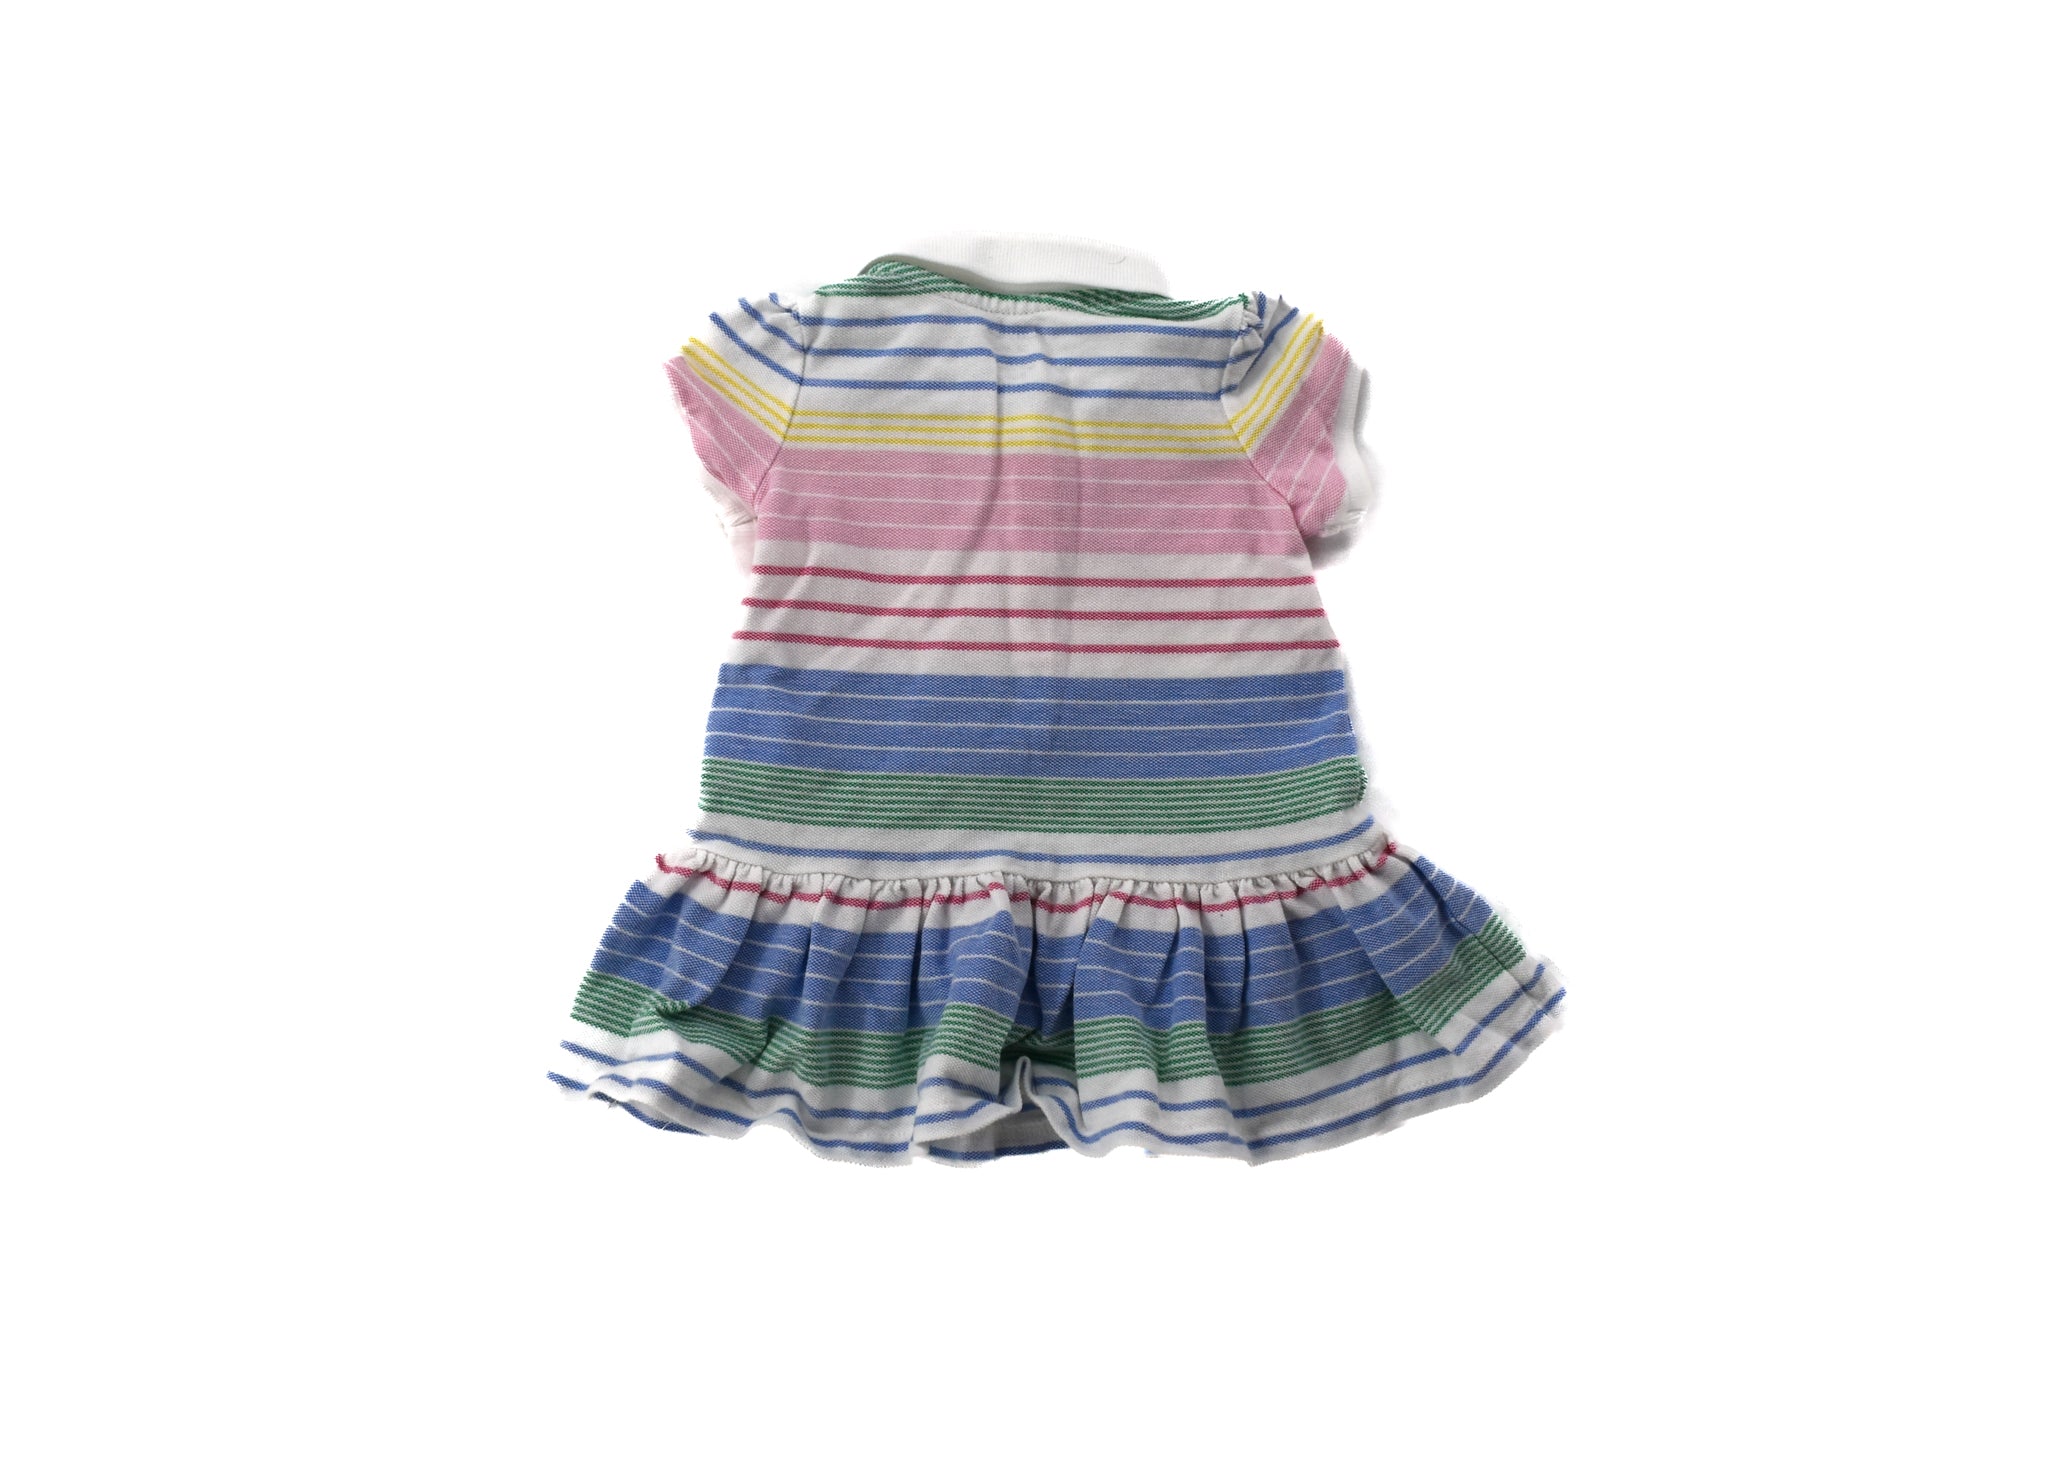 3 Months Baby Girl Pink Dress Stock Photo 148578083 | Shutterstock